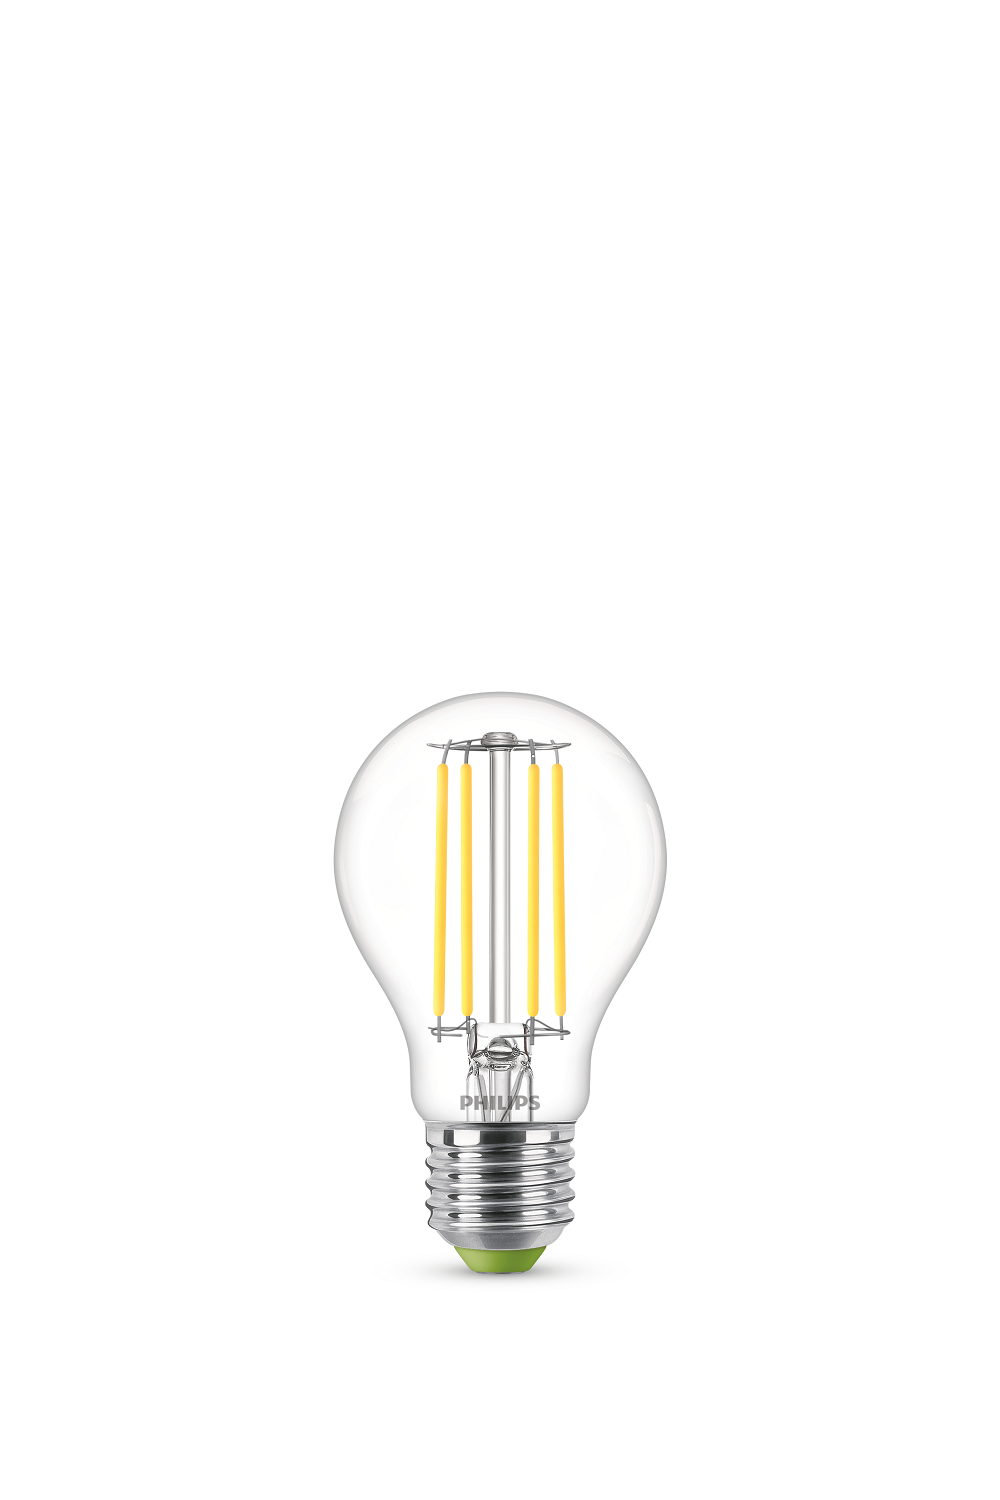 Philips Classic LED Lampe mit 40W, E27 Sockel, Klar, Cool White (4000K)